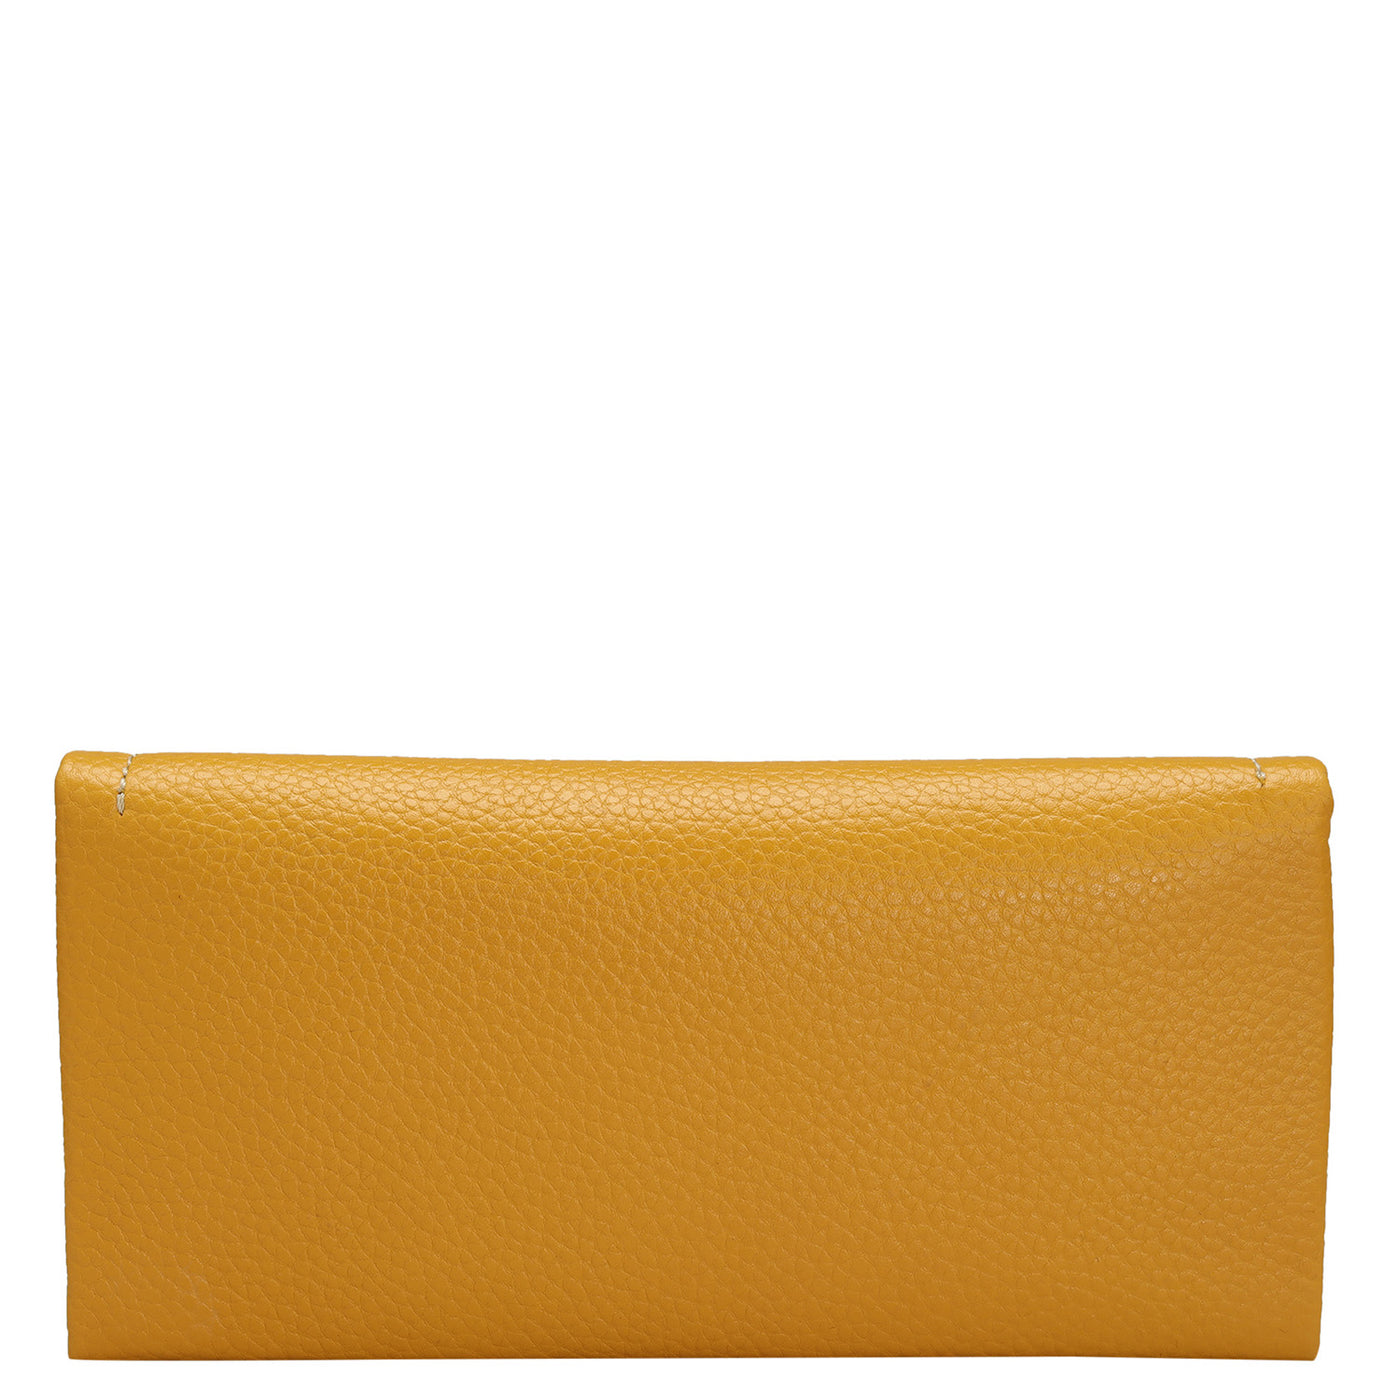 Wax Leather Ladies Wallet - Mango